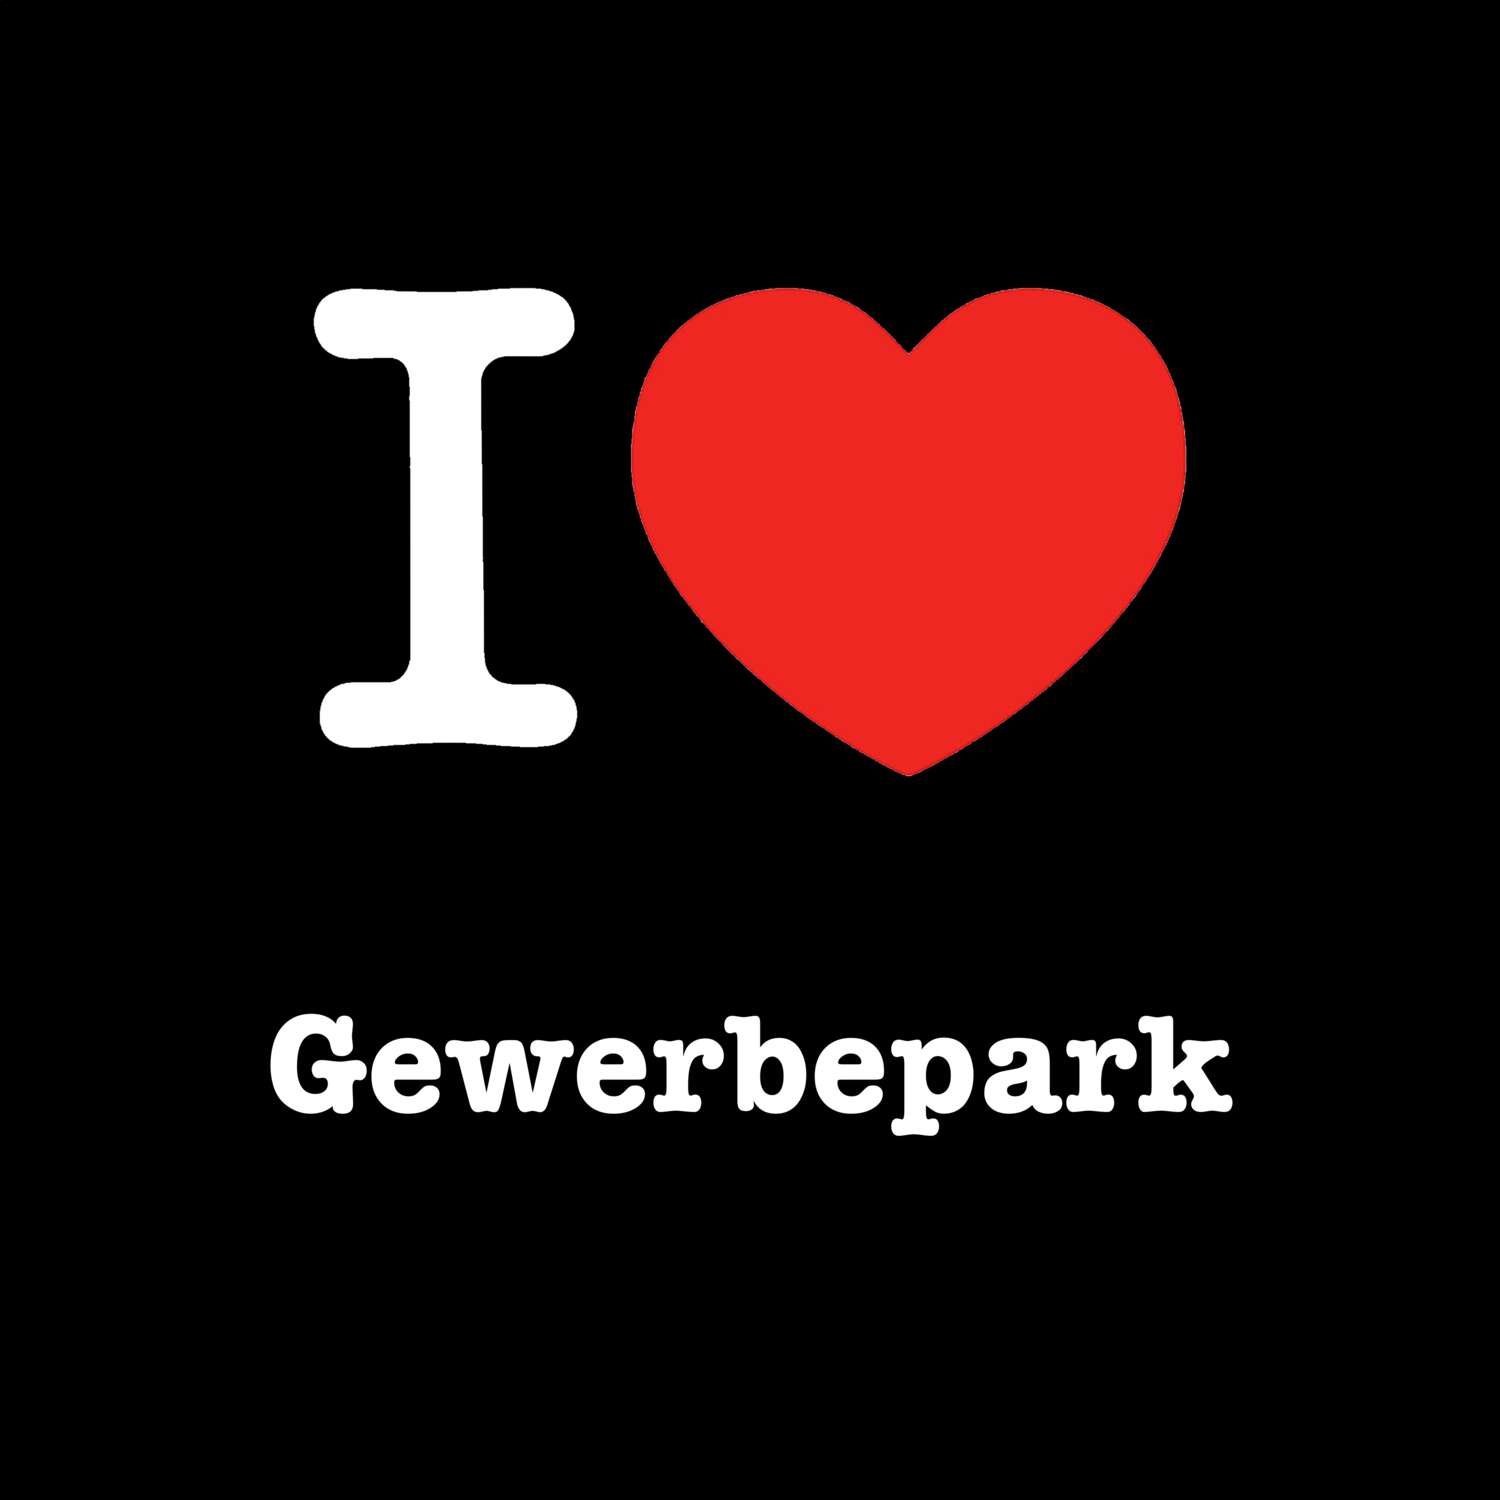 Gewerbepark T-Shirt »I love«